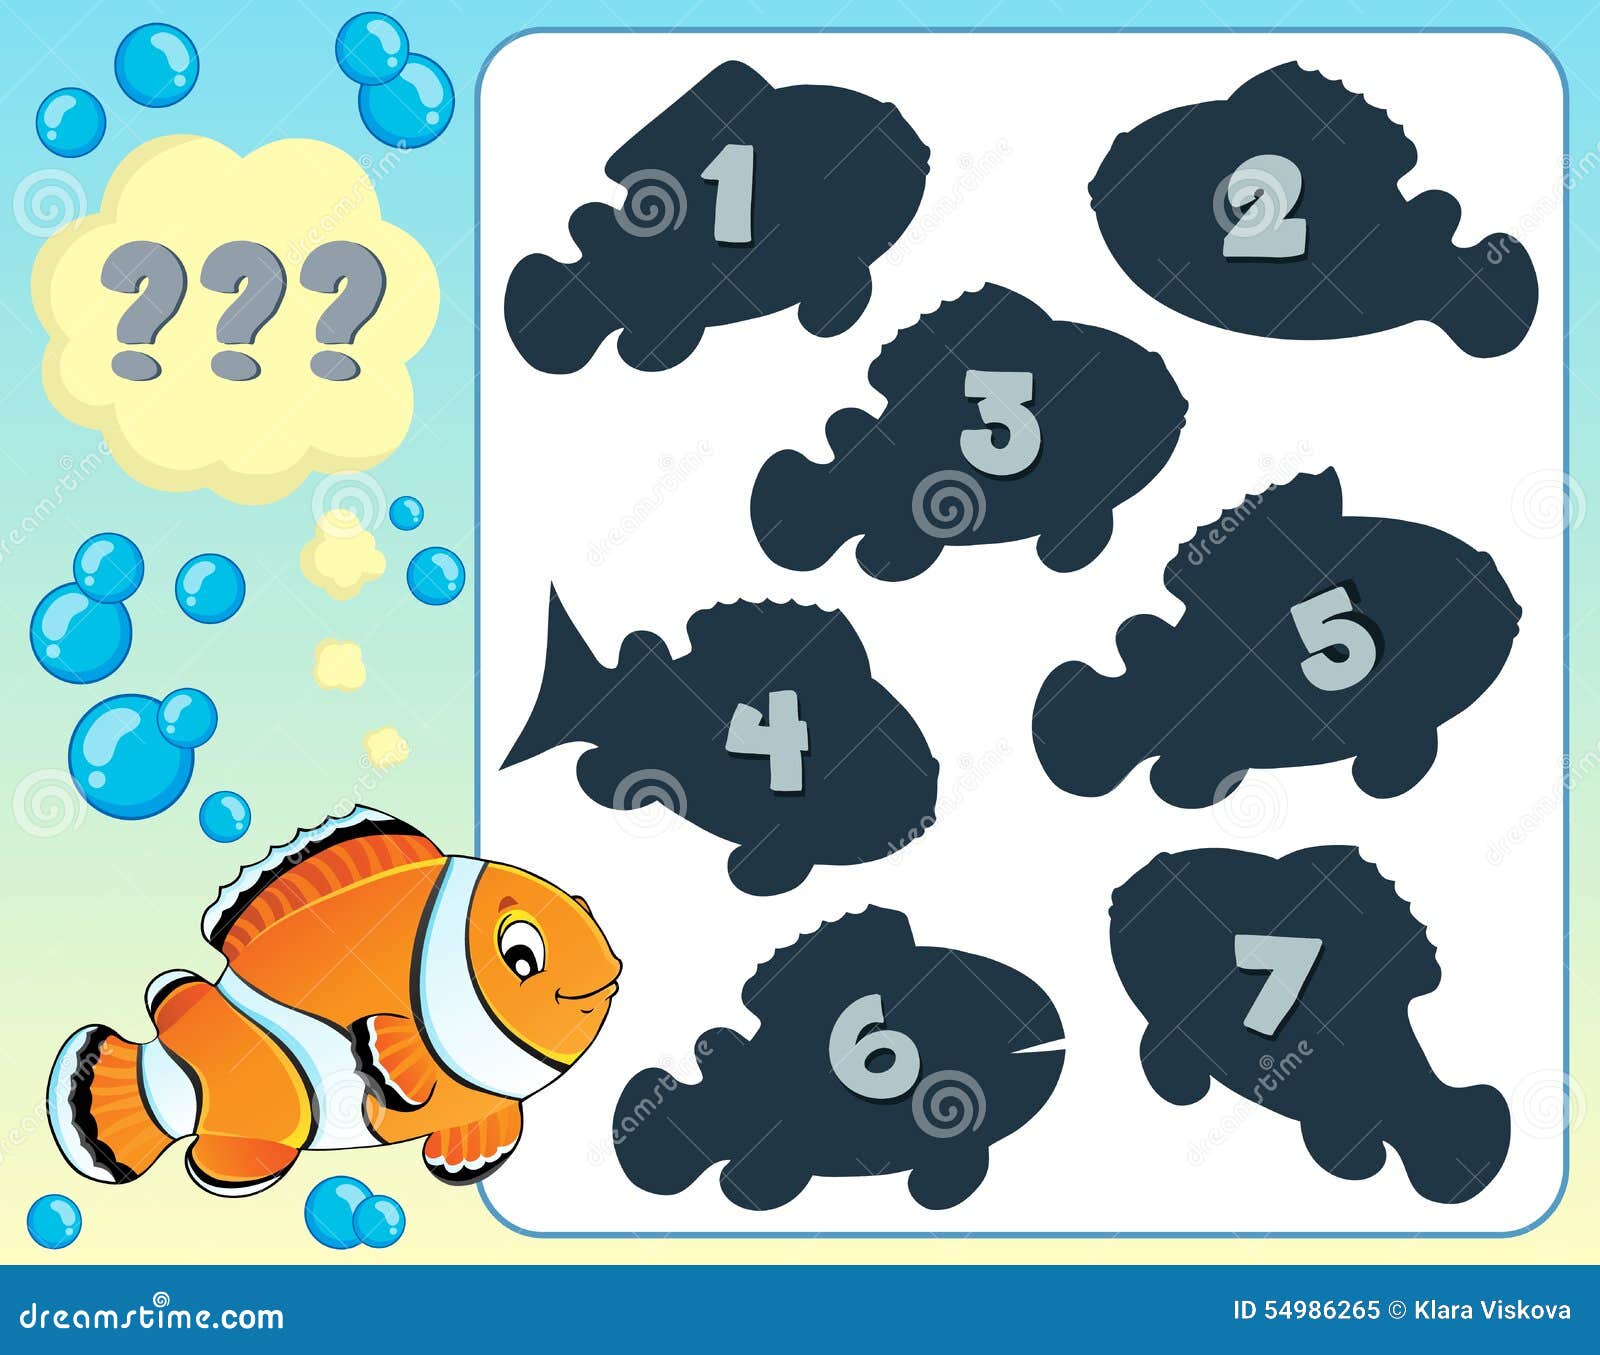 fish riddle theme image 8